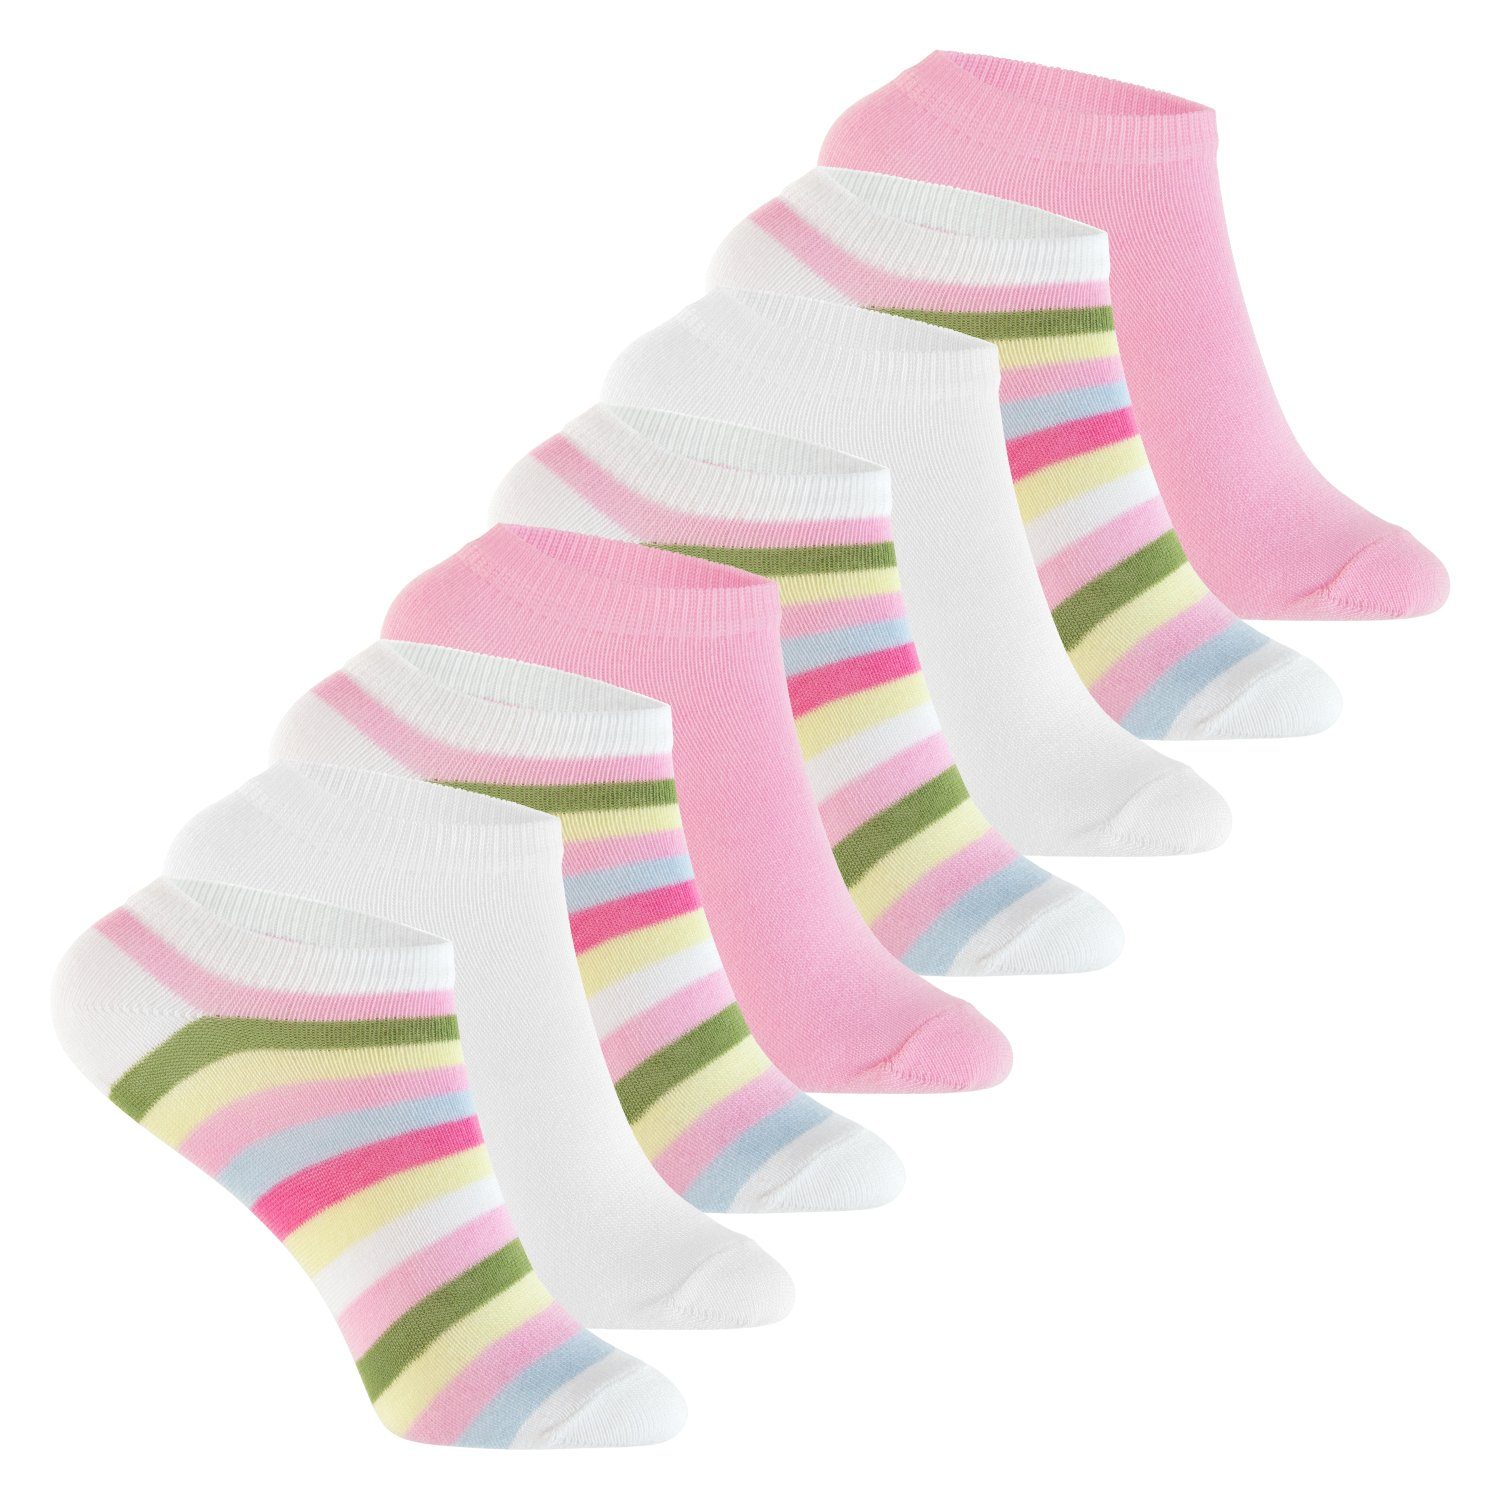 Footstar Kurzsocken Kinder Sneaker Socken (8 Paar) für Mädchen & Jungen, bunt Multicolor